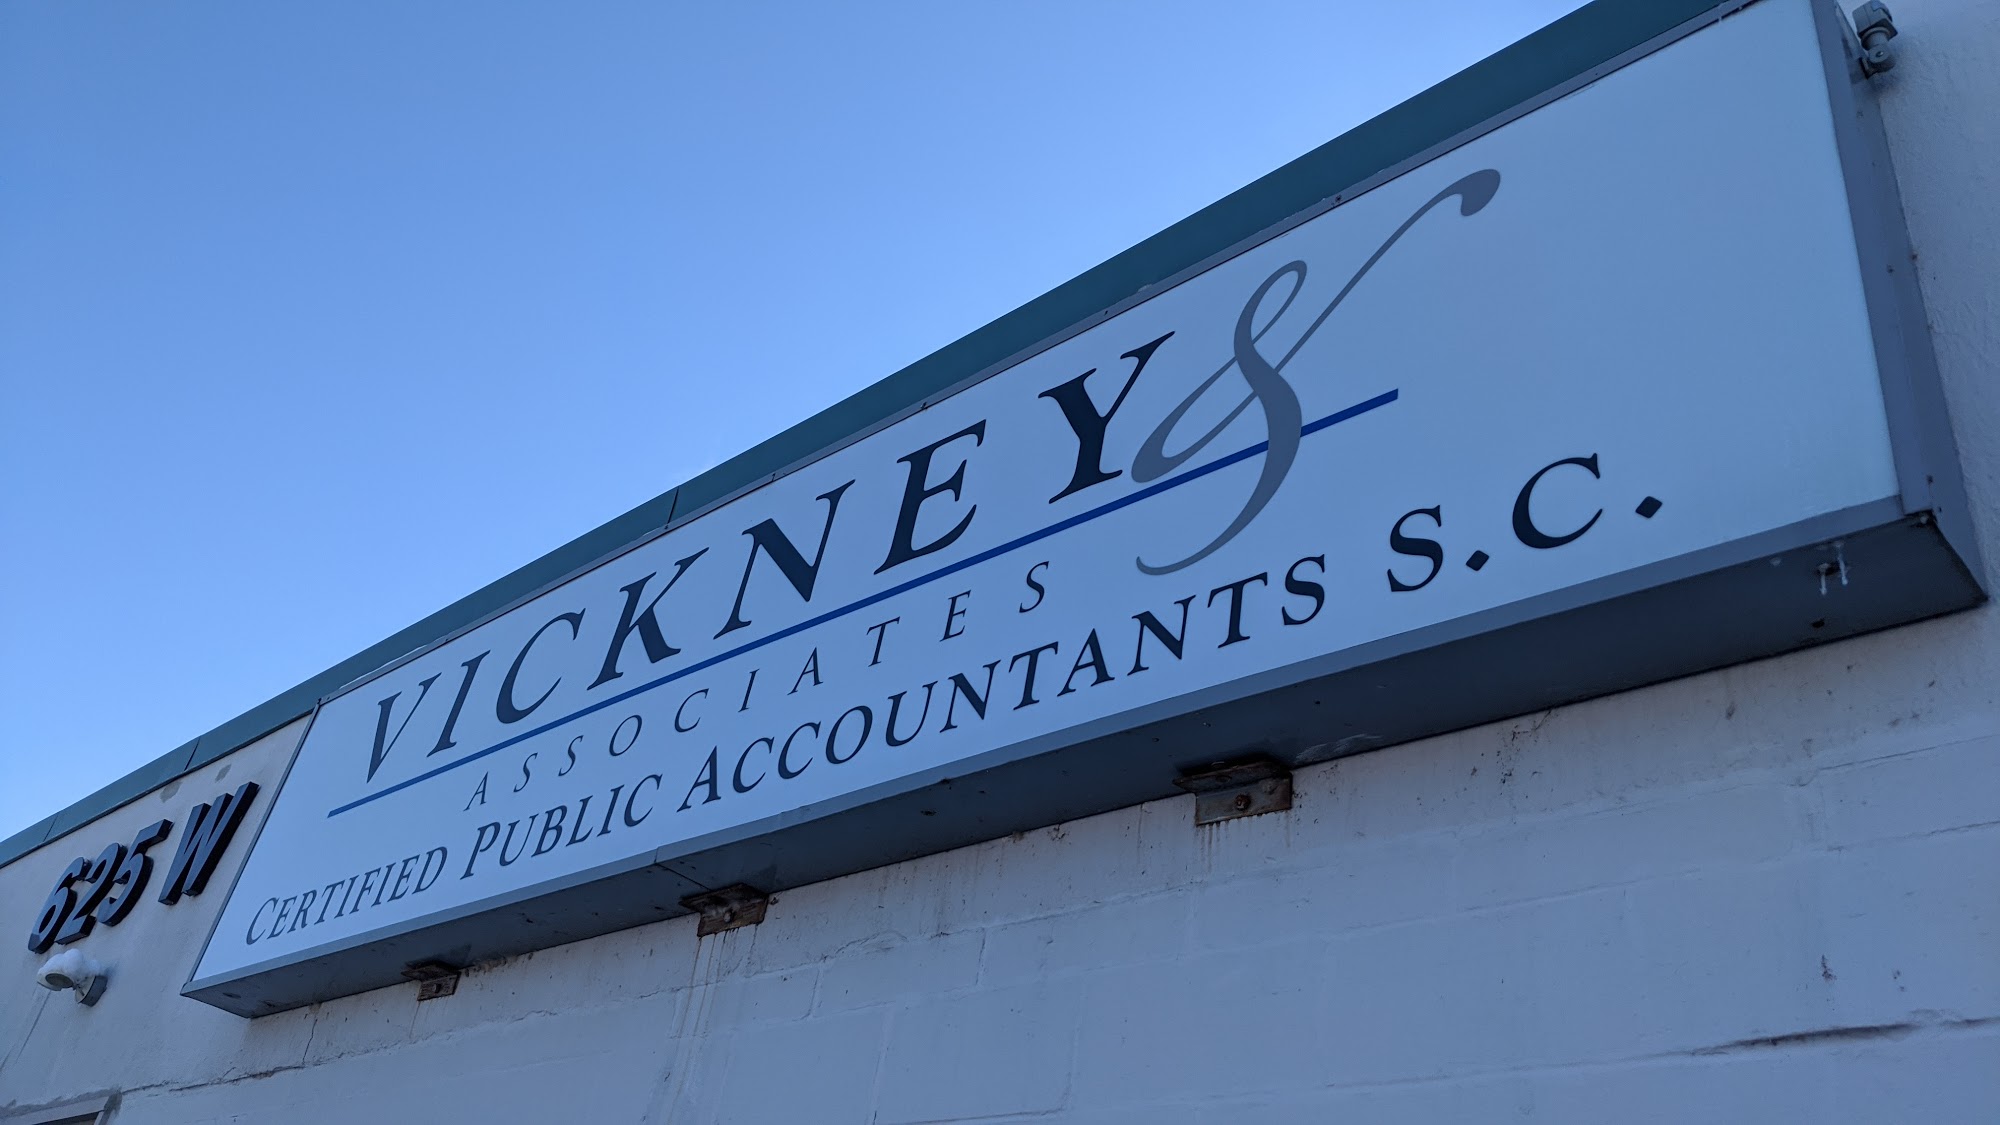 Vickney and Associates CPA SC